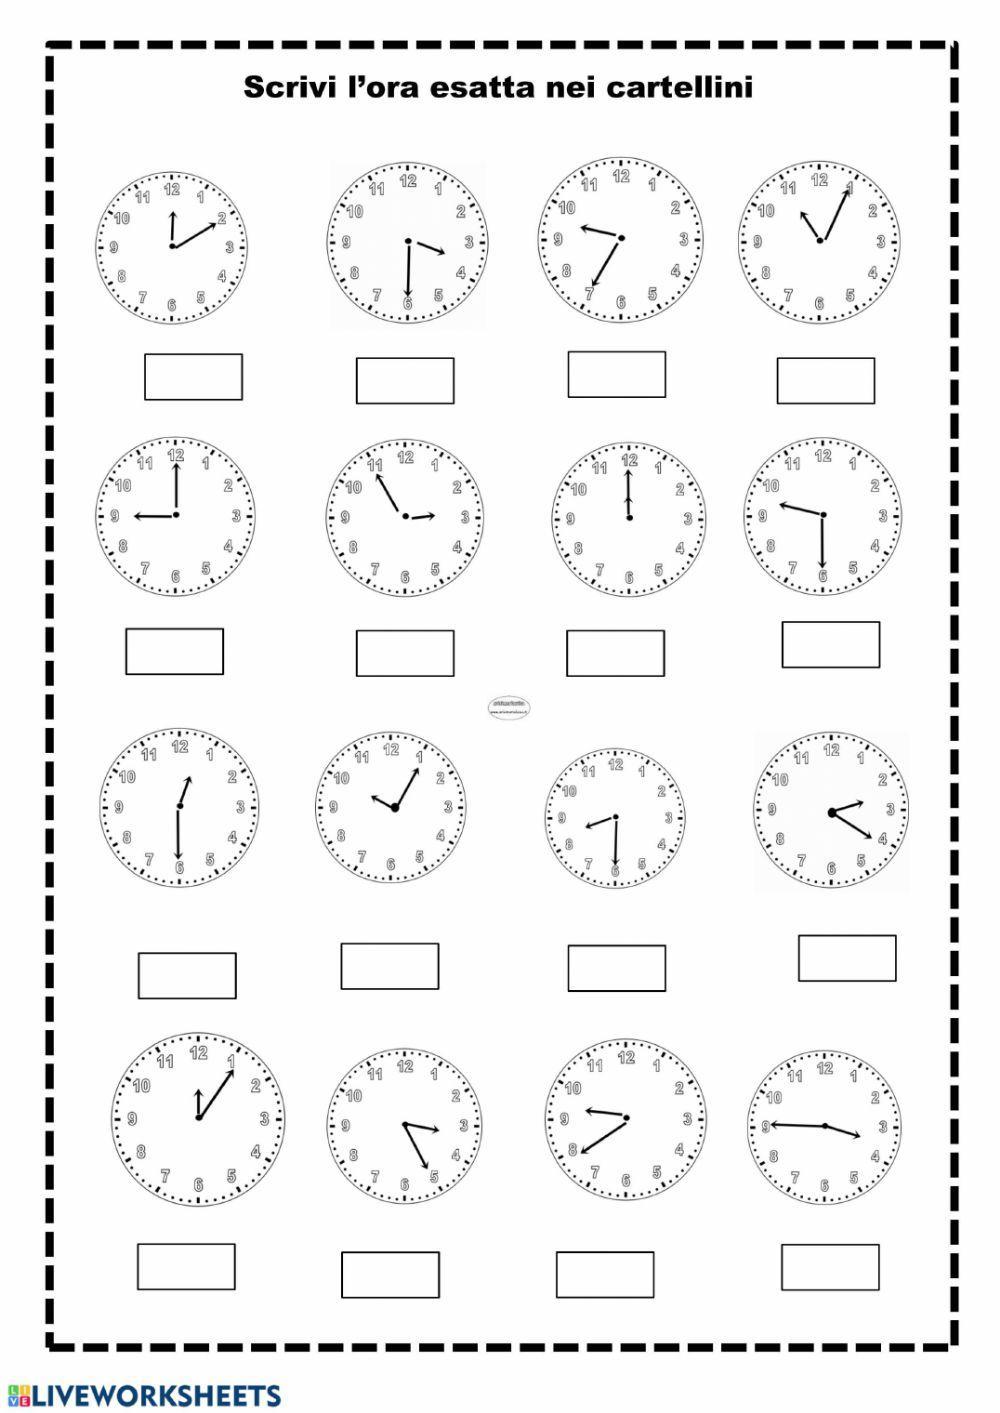 Orologi e orari